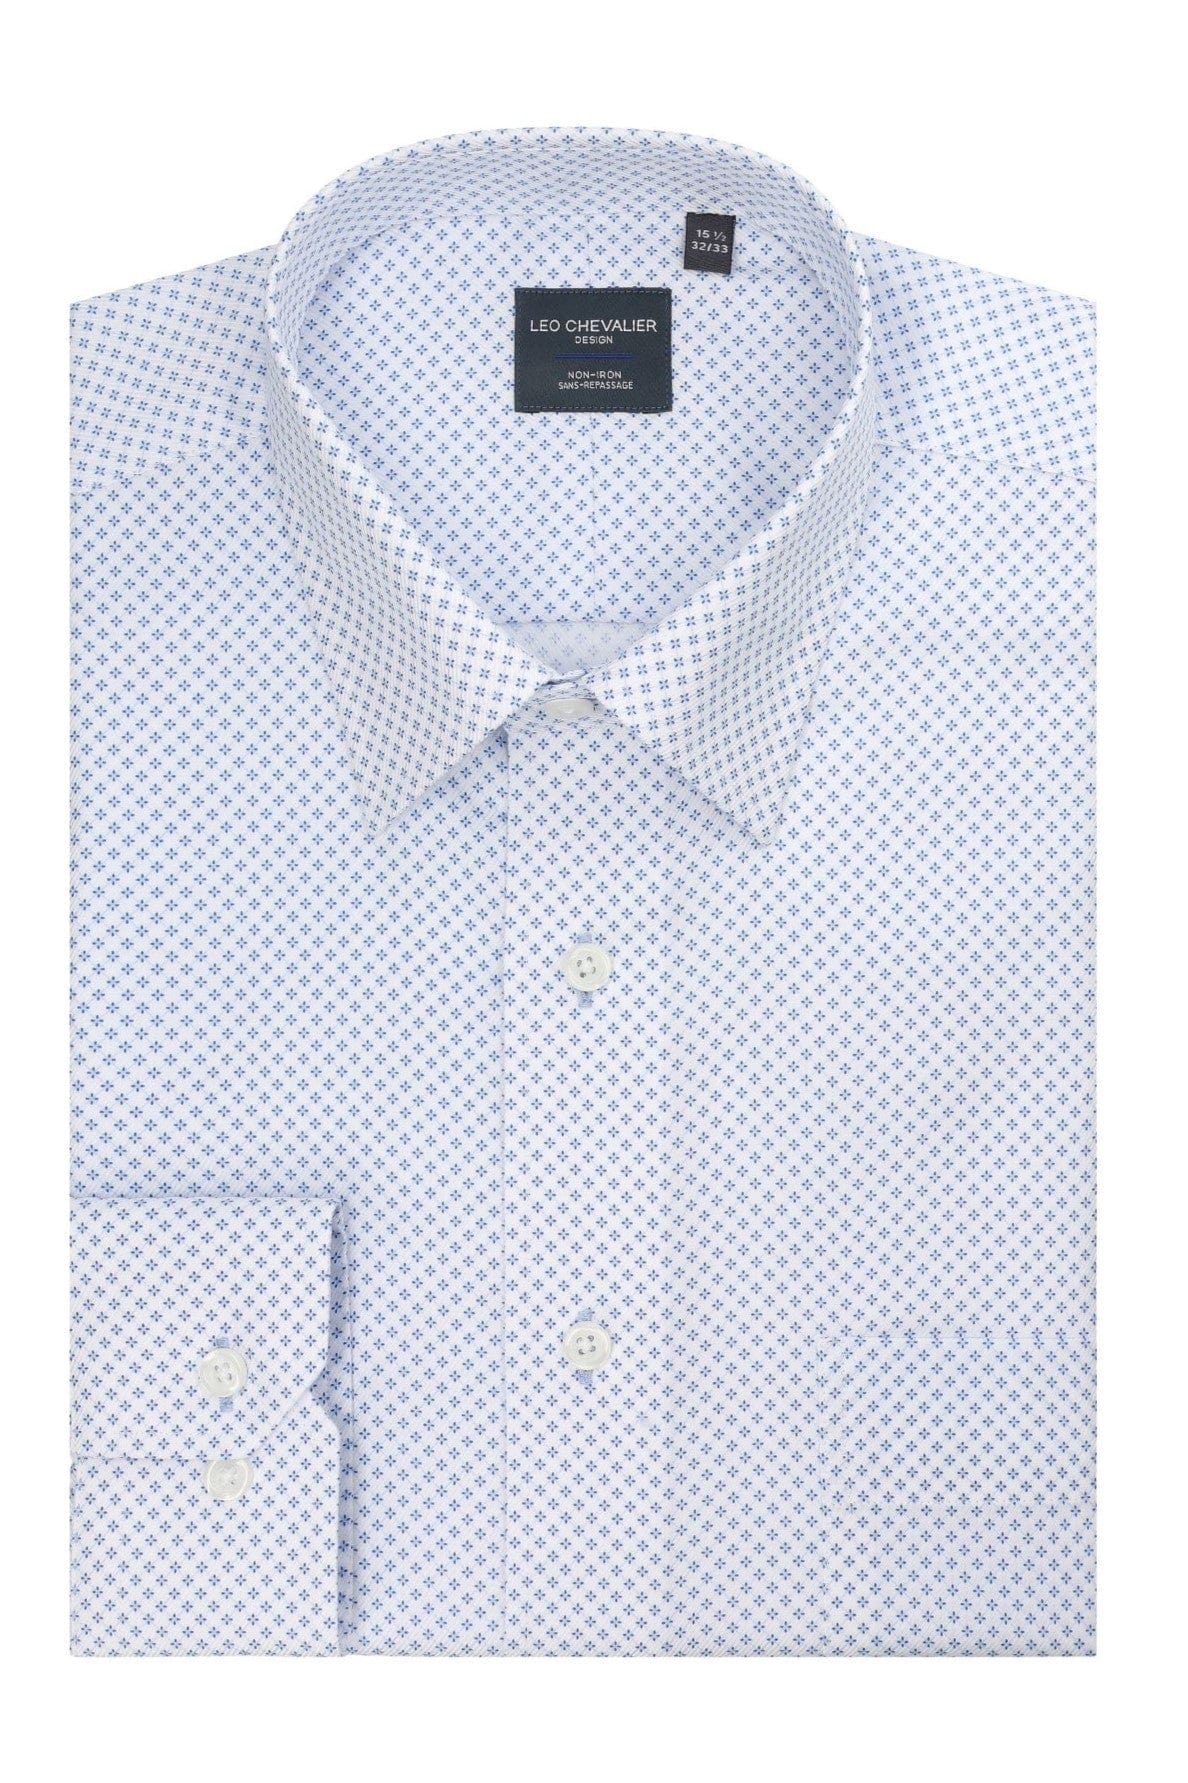 Leo Chevalier Design Light Blue Print Non-Iron Dress Shirts for Men